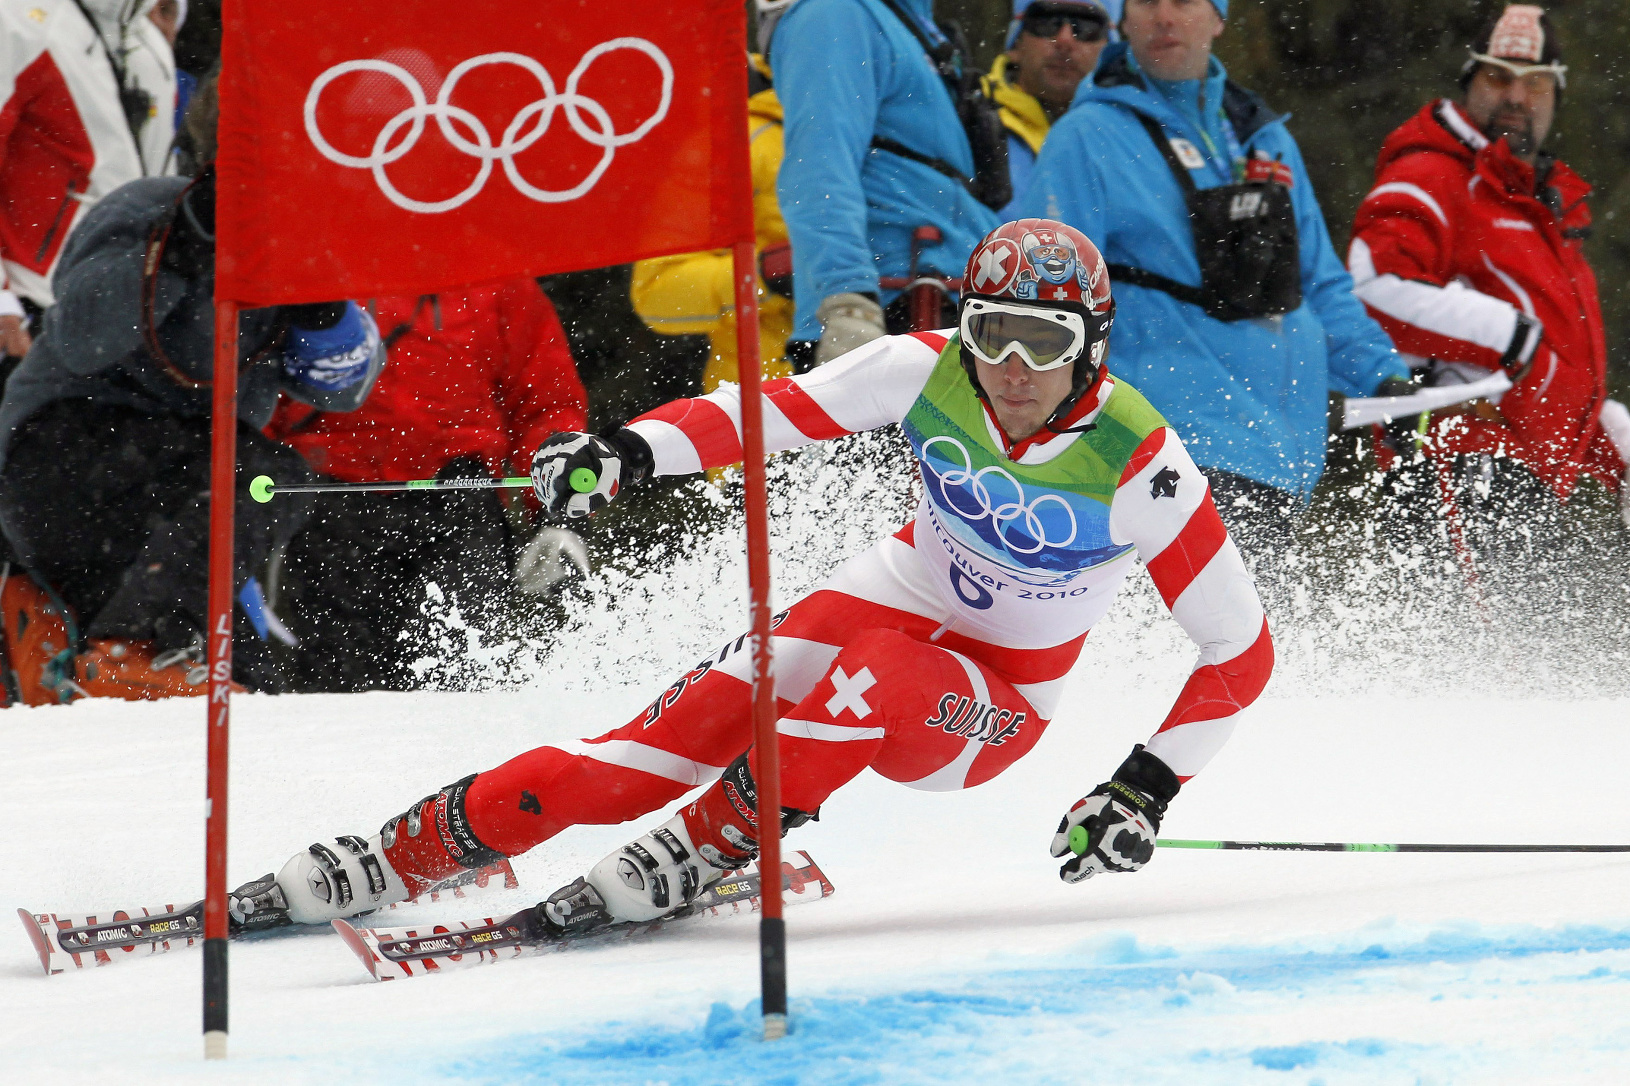 Švajčiarsky lyžiar Carlo Janka